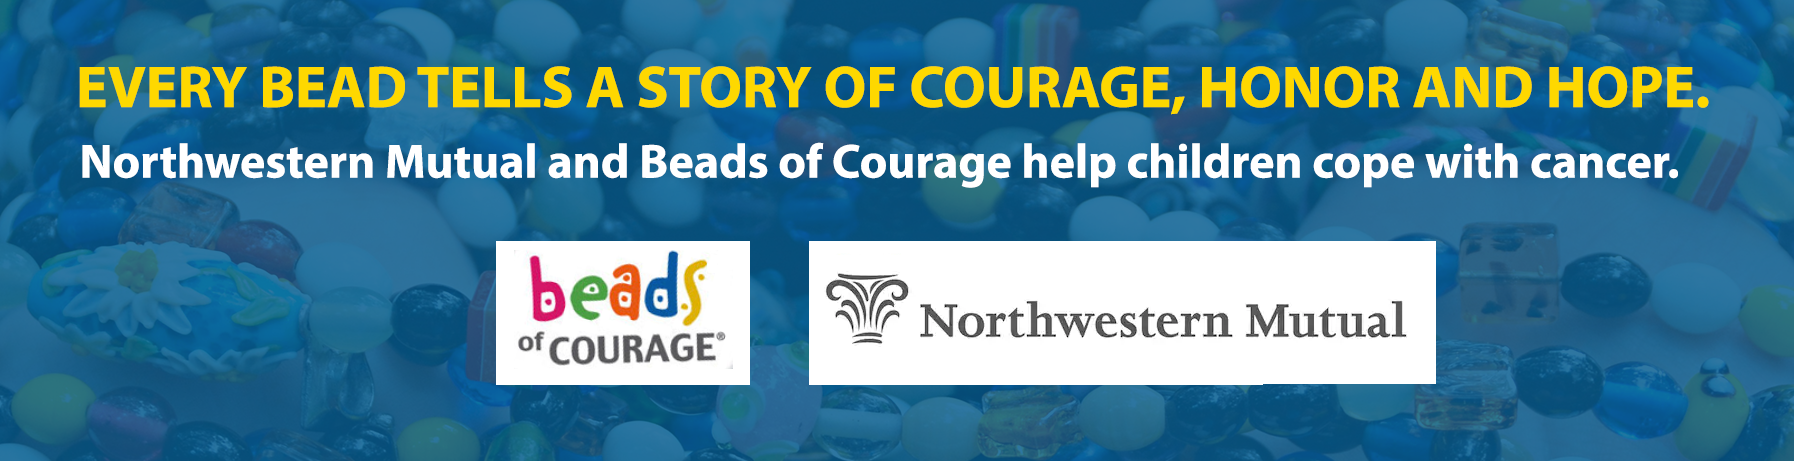 Northwestern Mutual, Beads of Courage